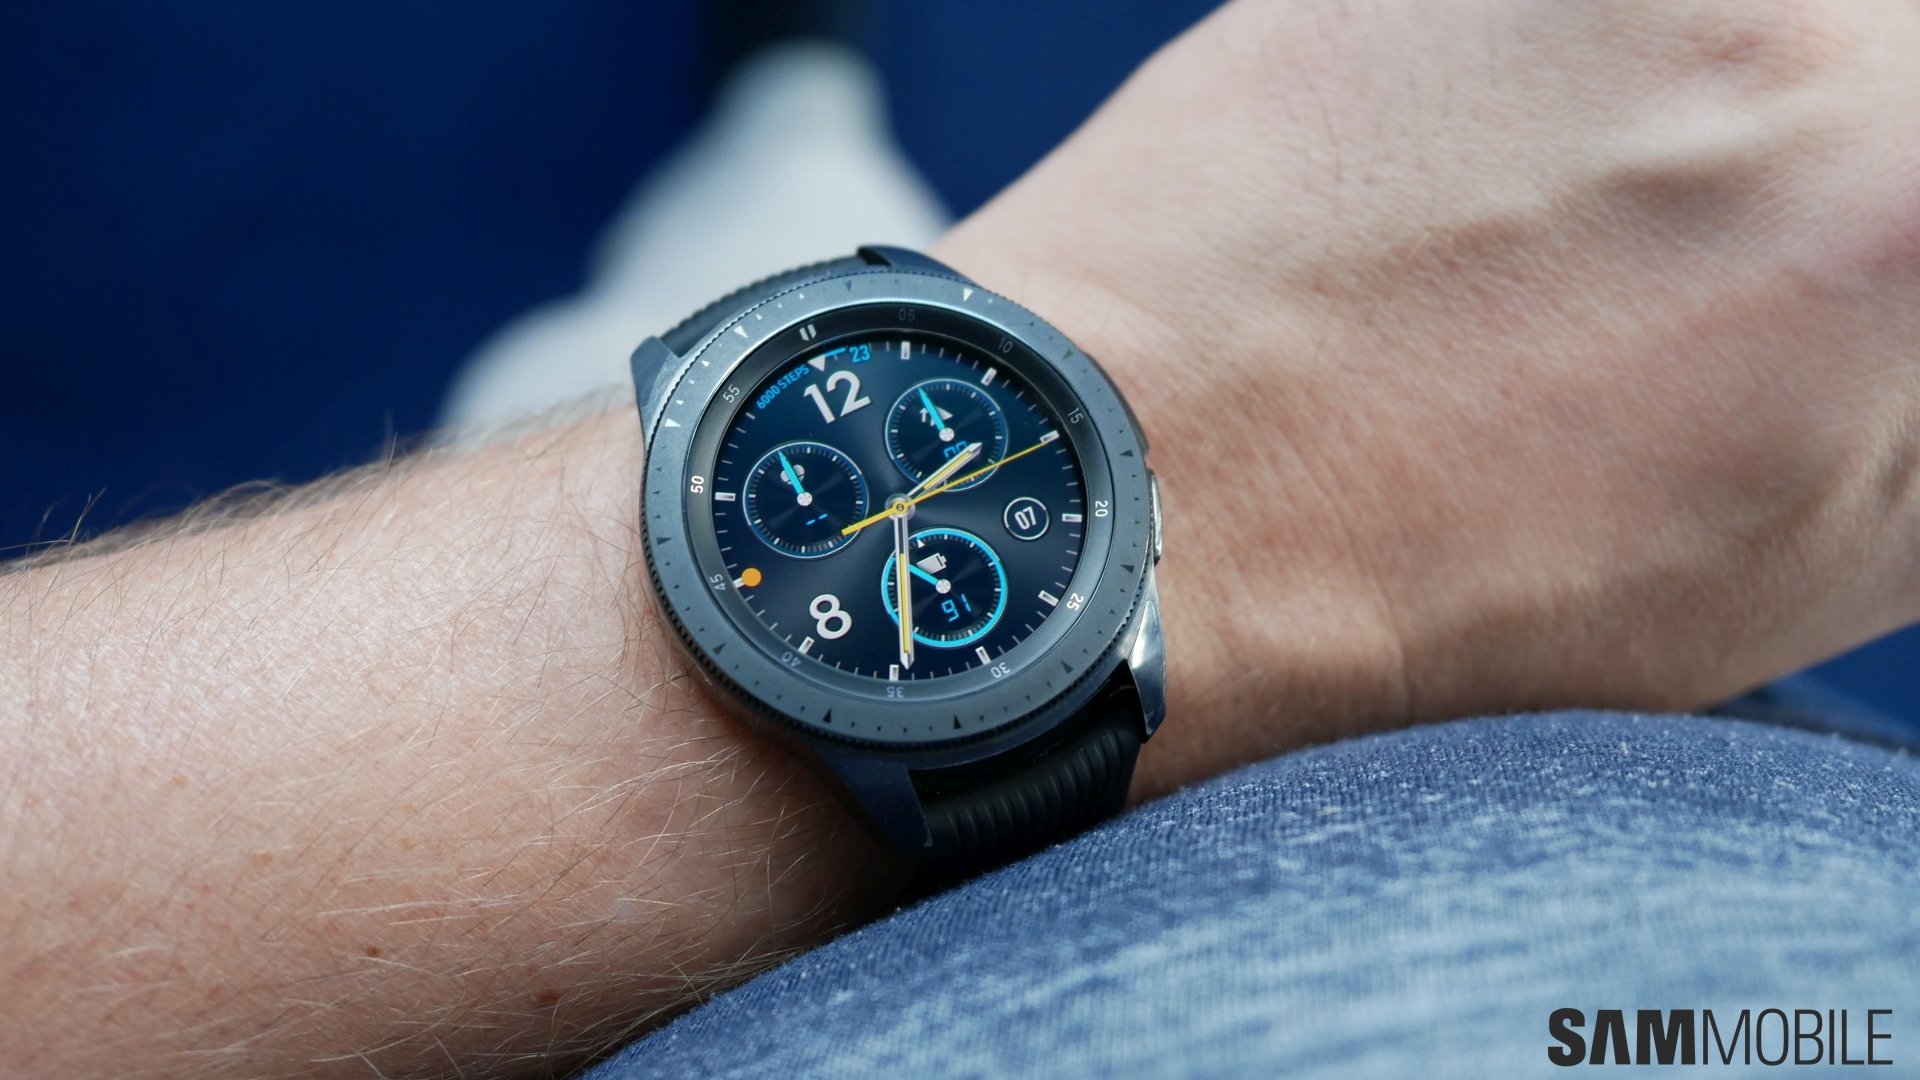 Samsung Galaxy Watch review: A 